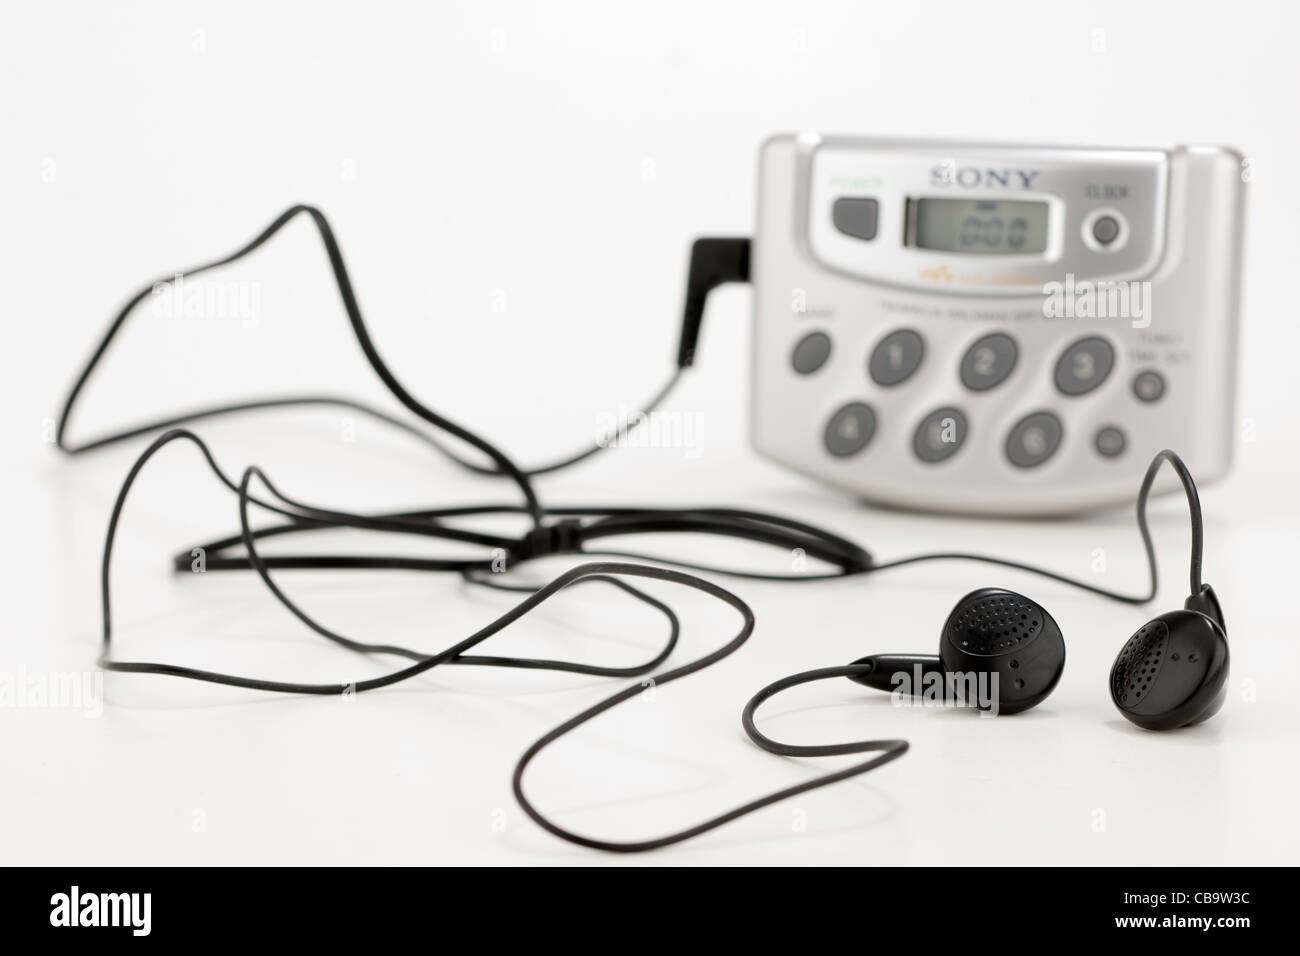 Portable personal Sony analogue radio and earphones Stock Photo